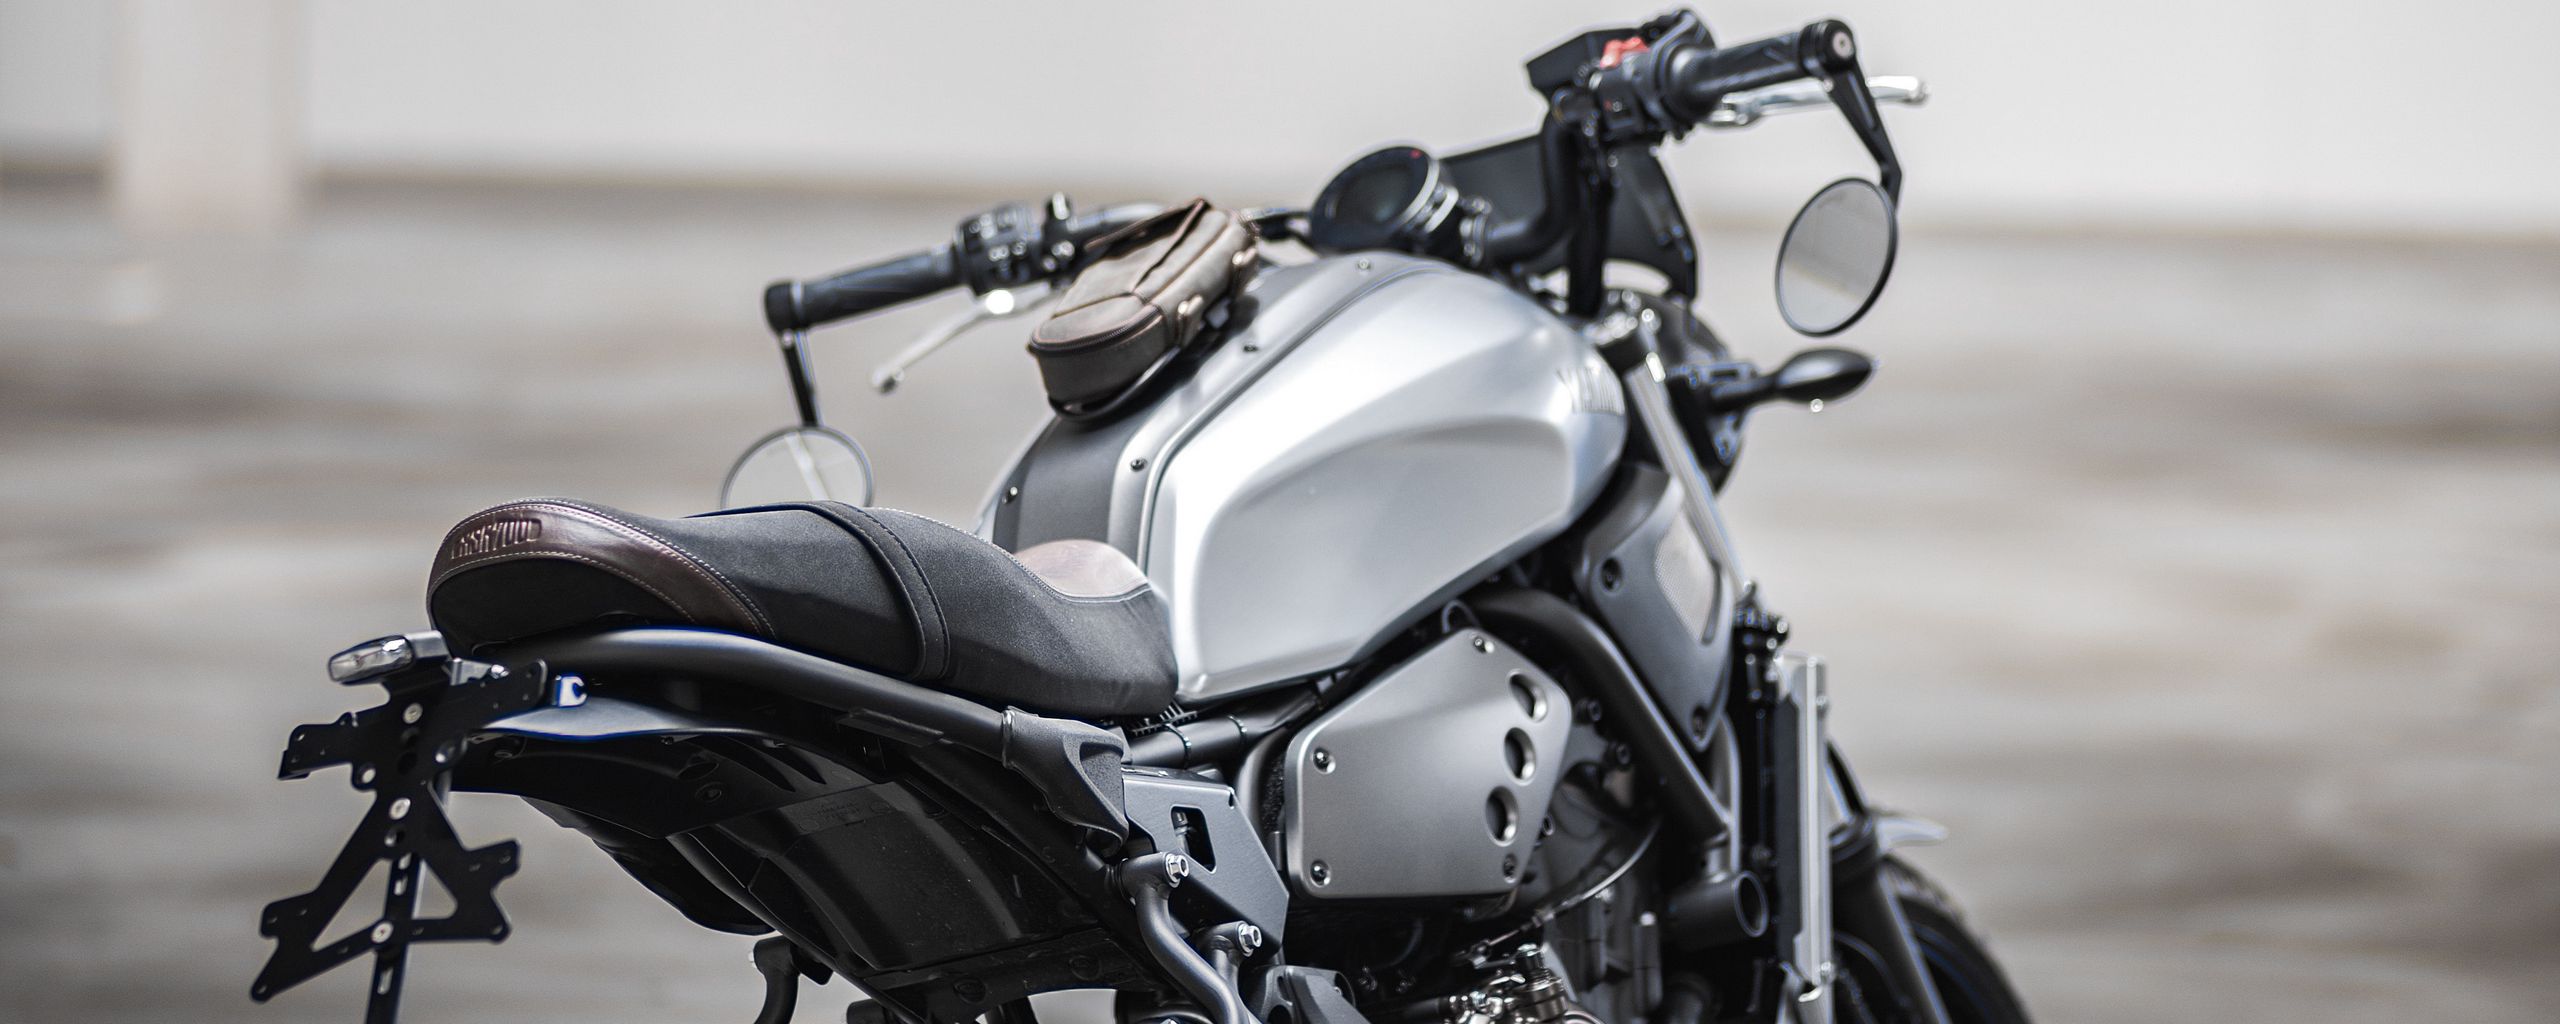 Download wallpaper 2560x1024 motorcycle, rear view, wheels, gray ...